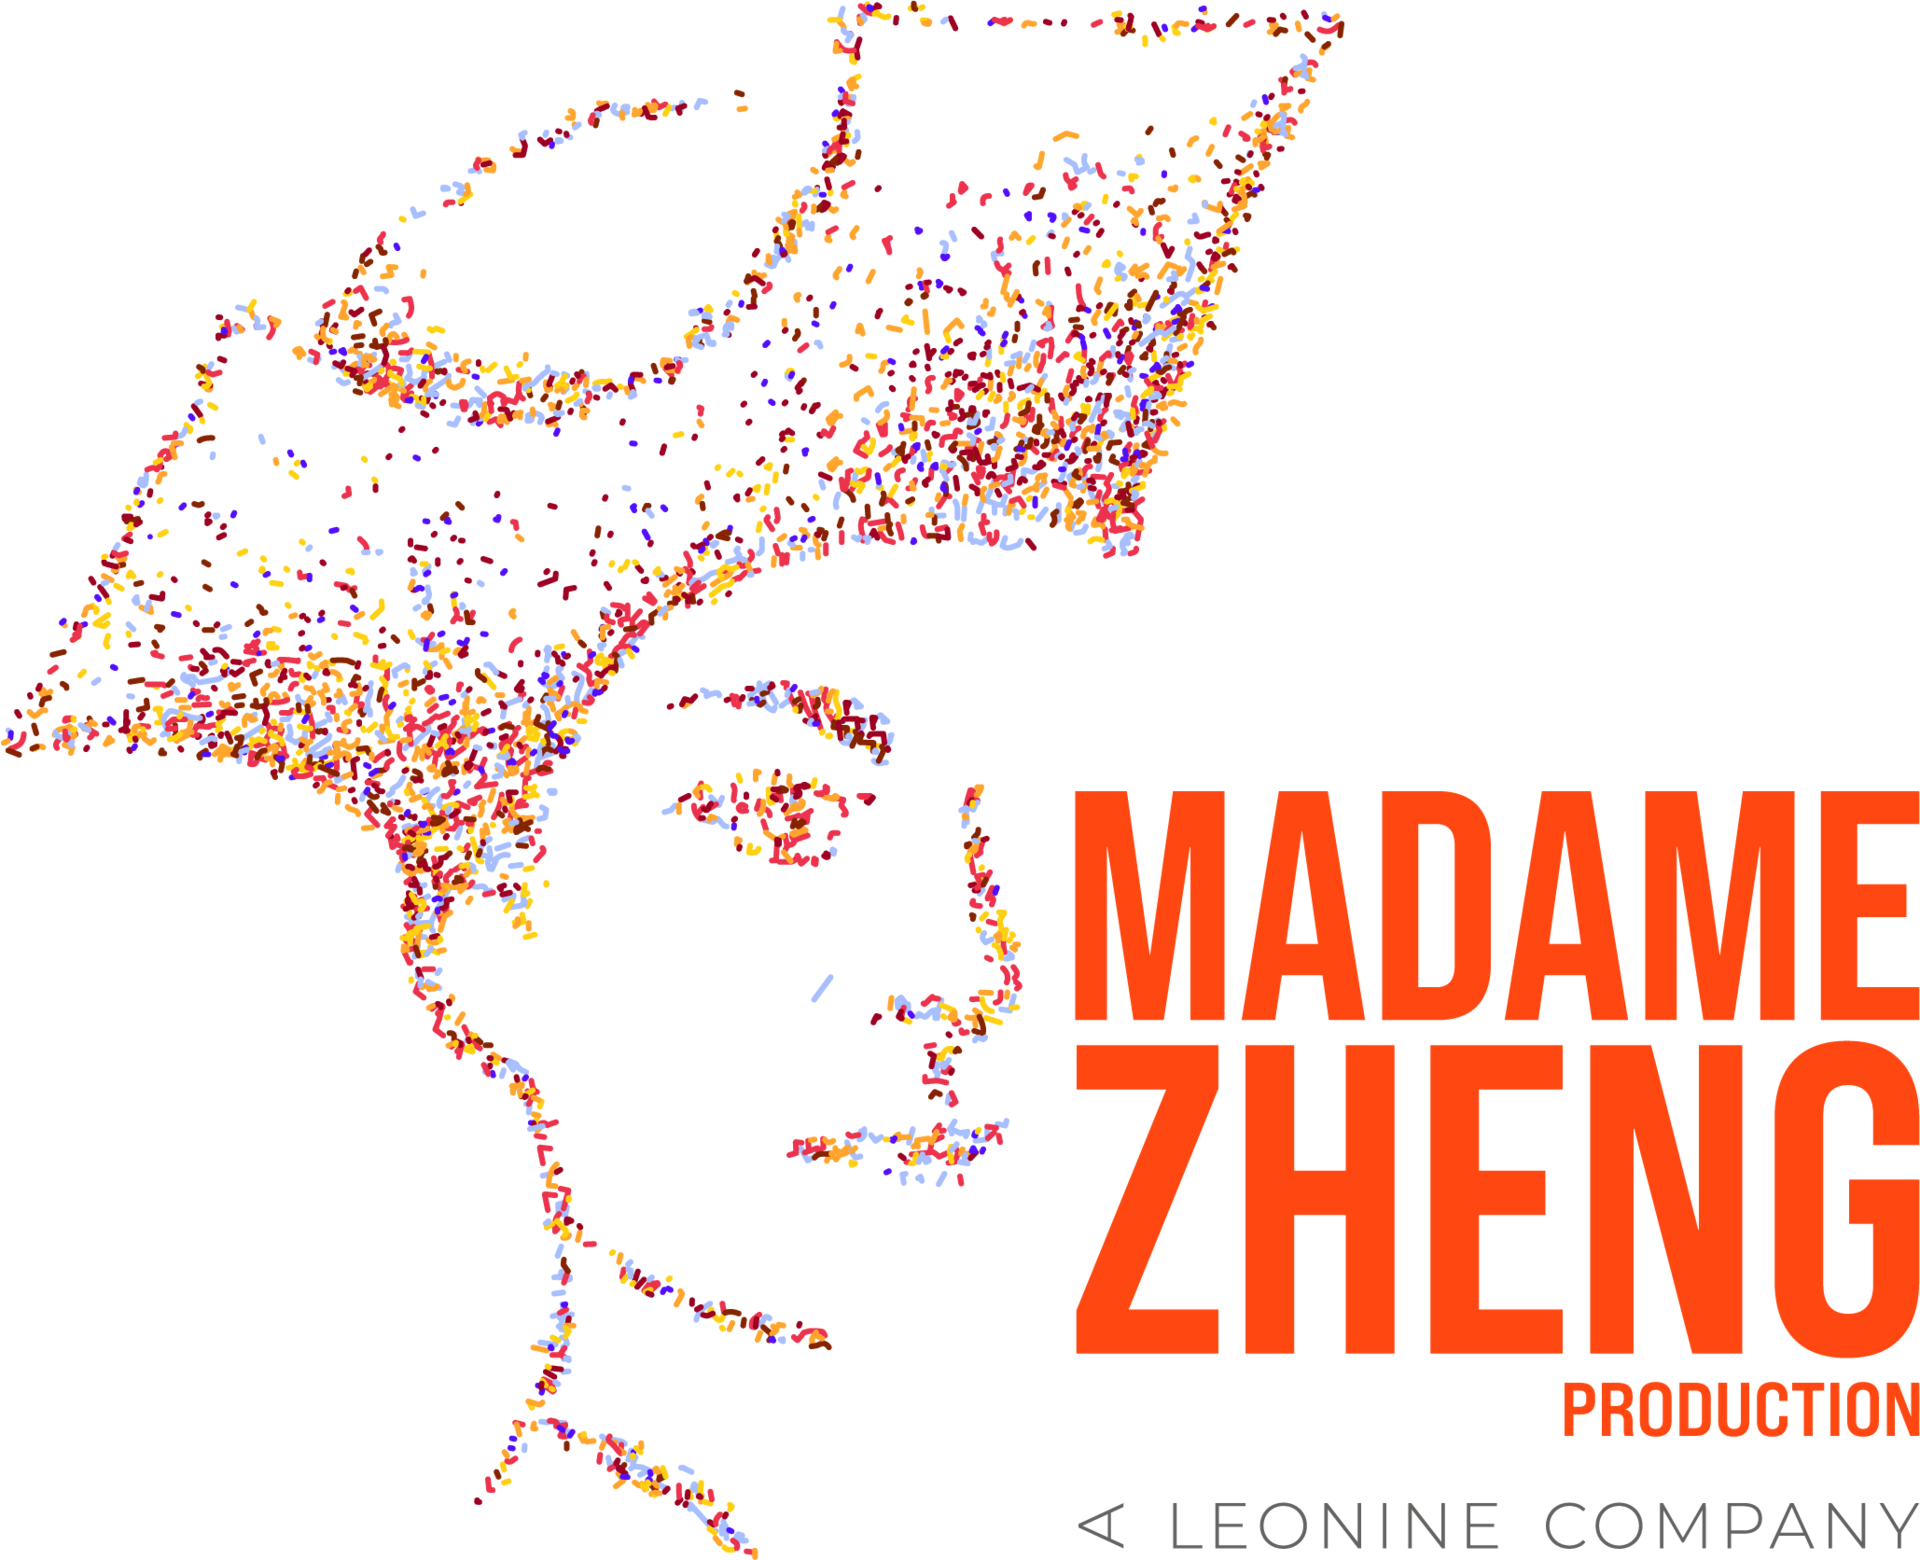 Madame Zheng Production Wortbildmarke farbig